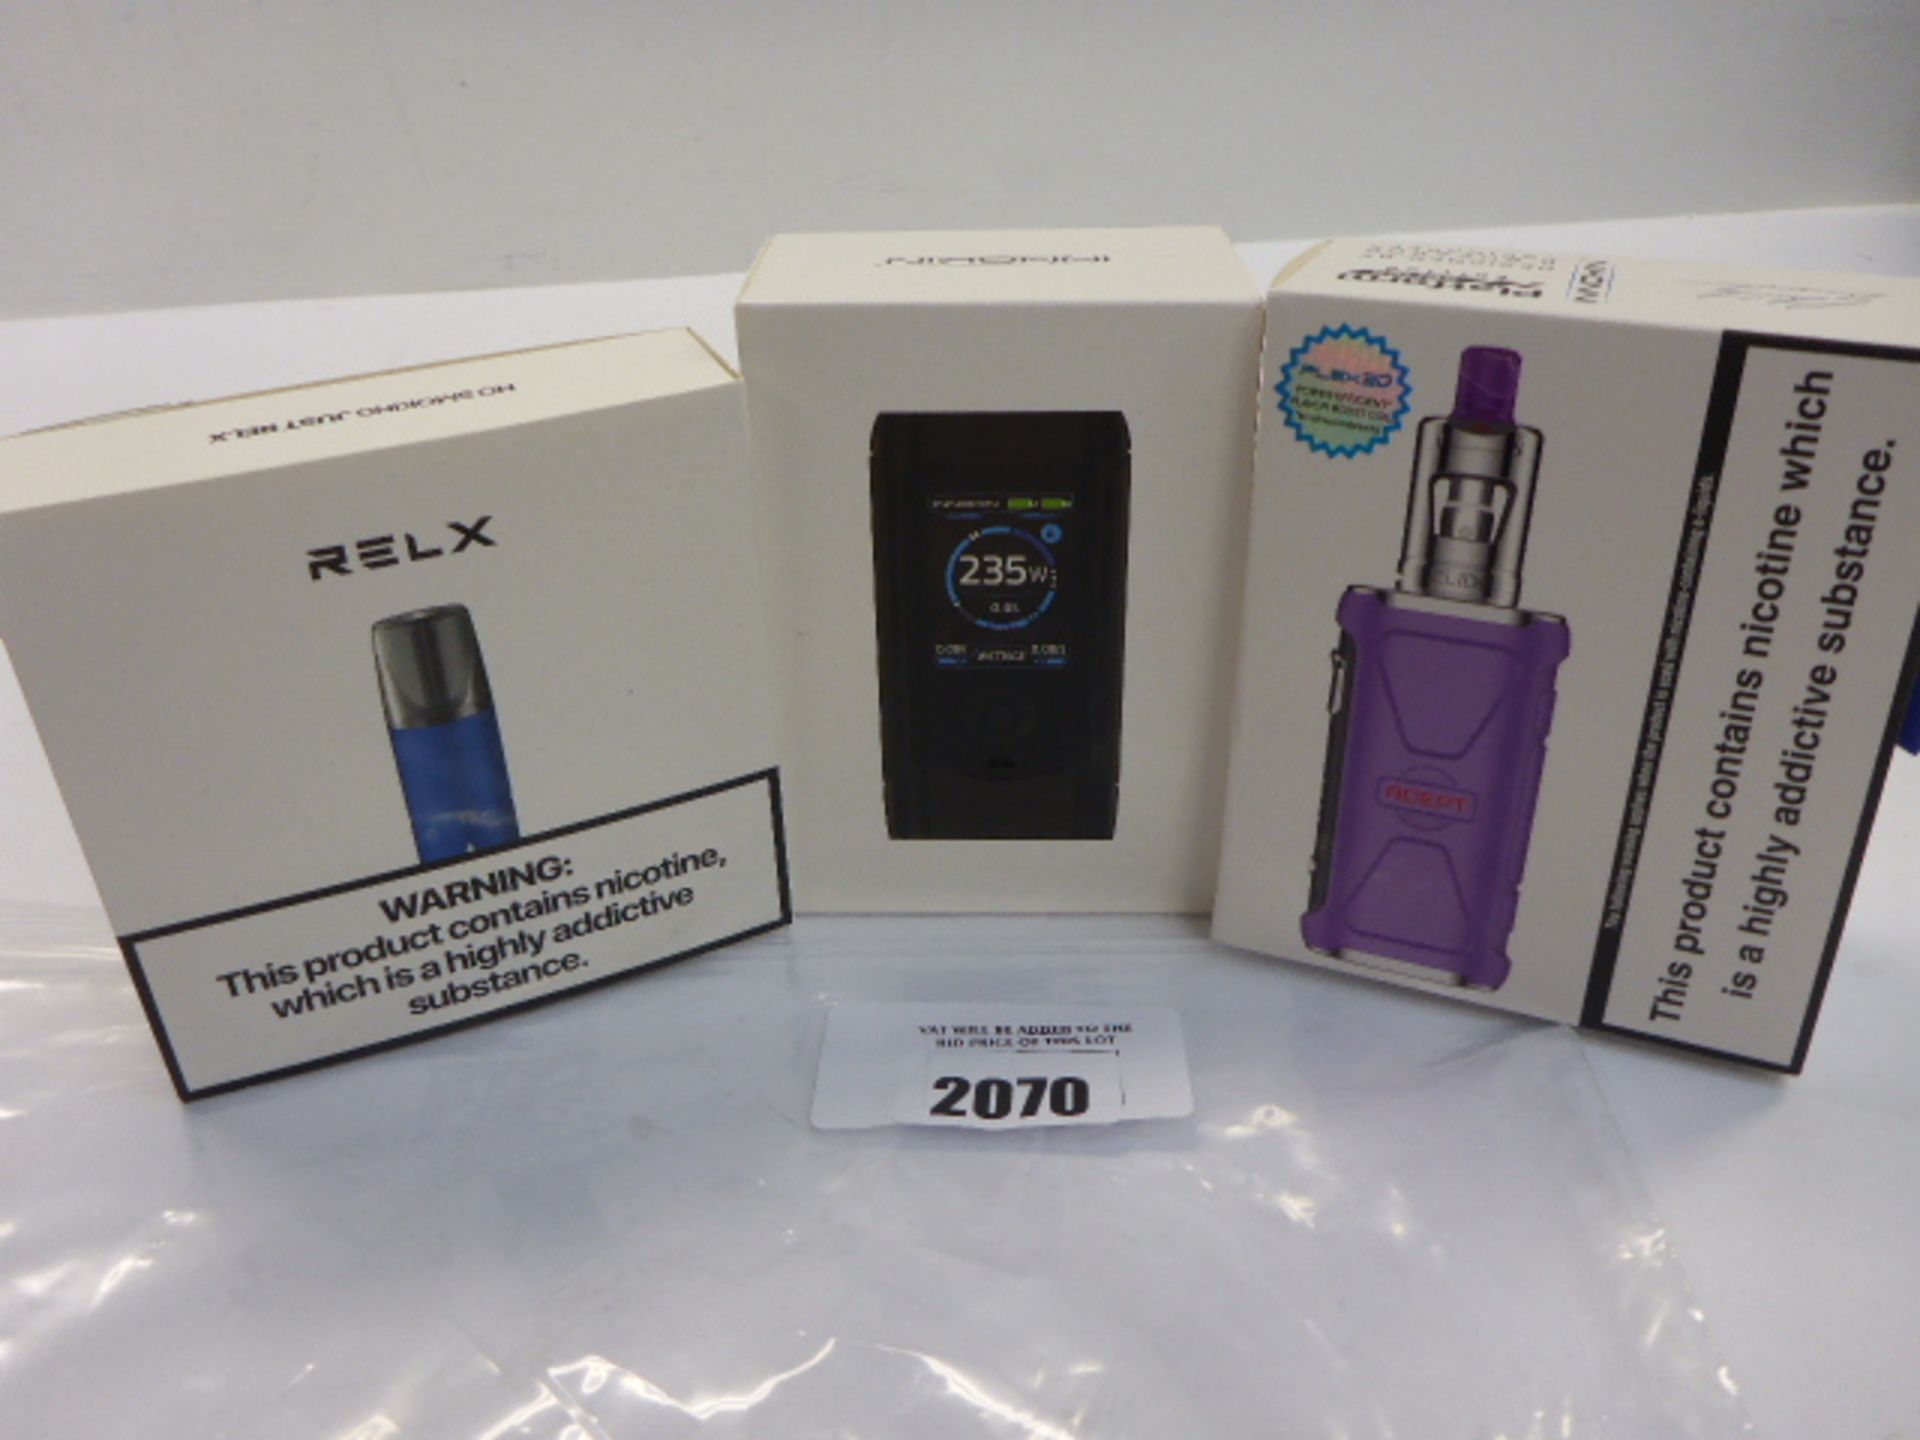 Relx, Innokin, Vaping kits, includes Innokin Platform Series edition.